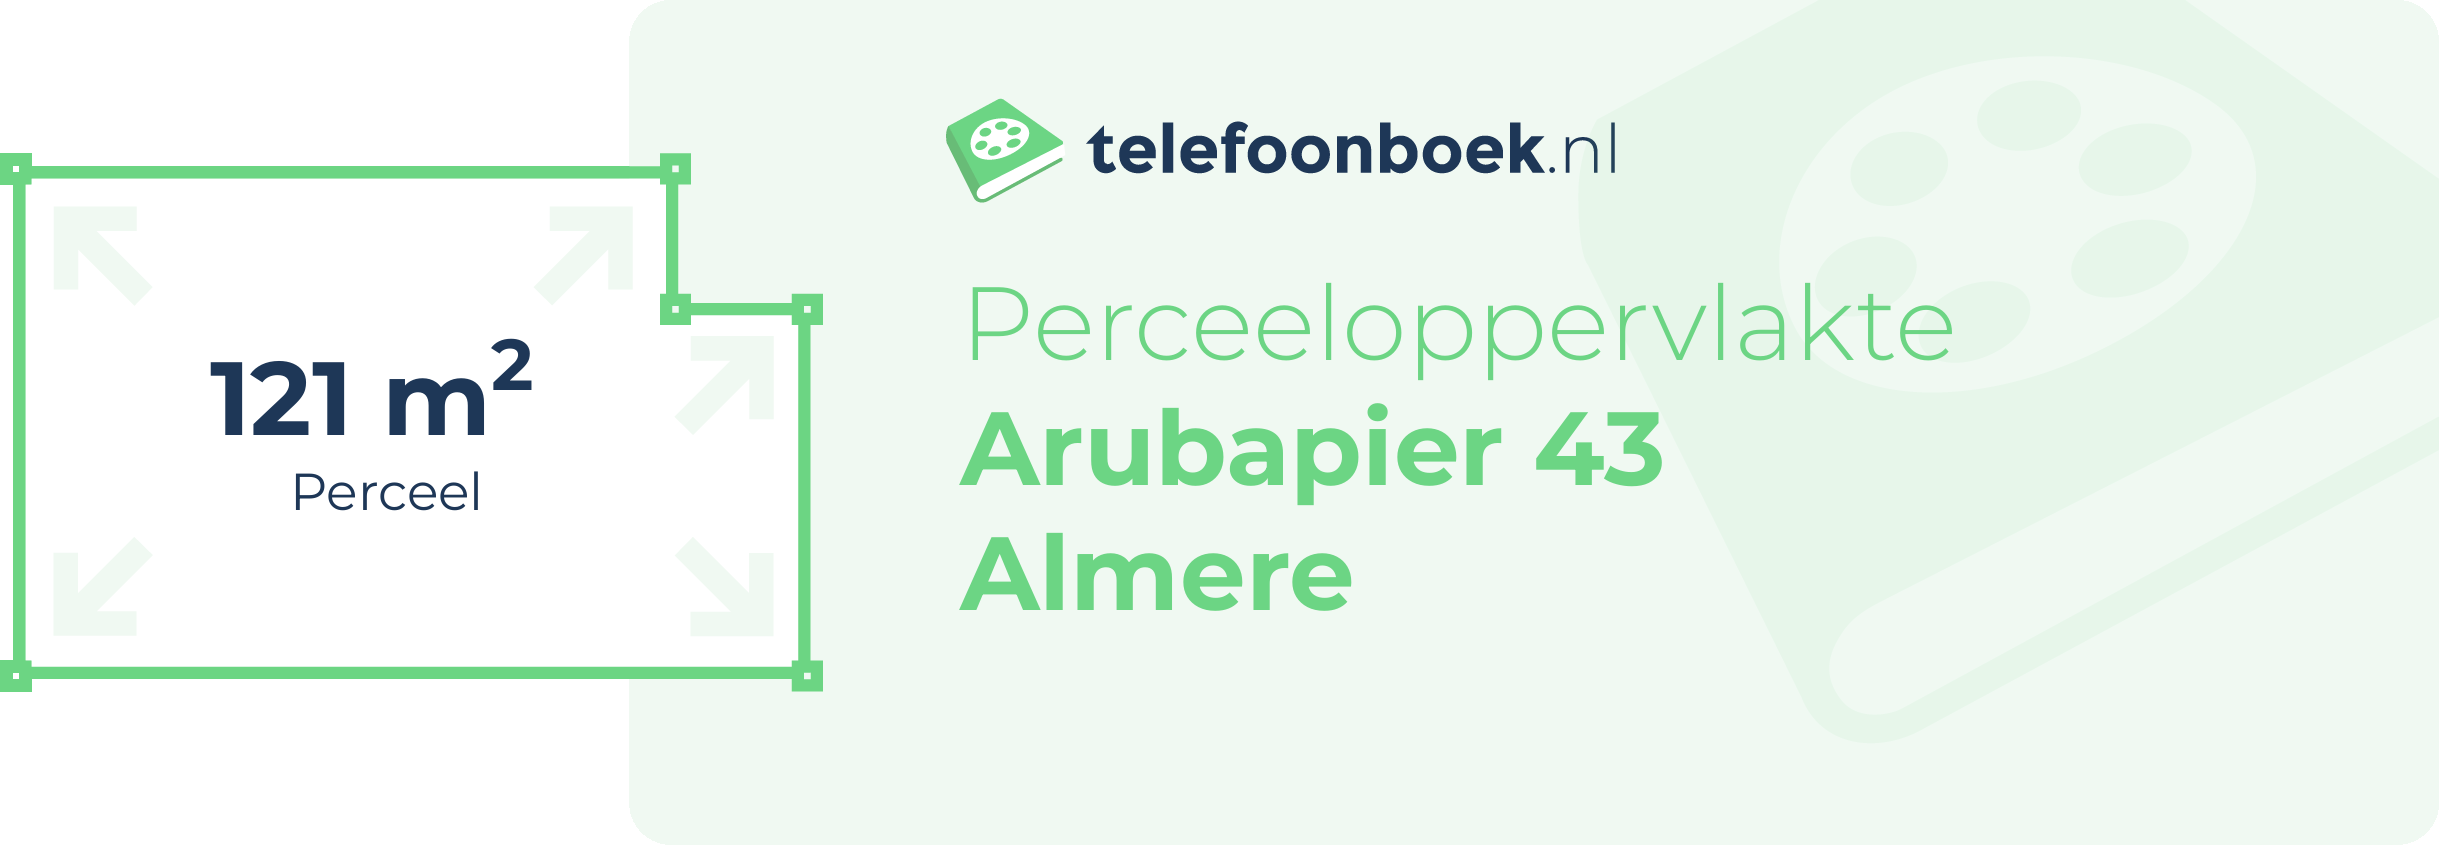 Perceeloppervlakte Arubapier 43 Almere